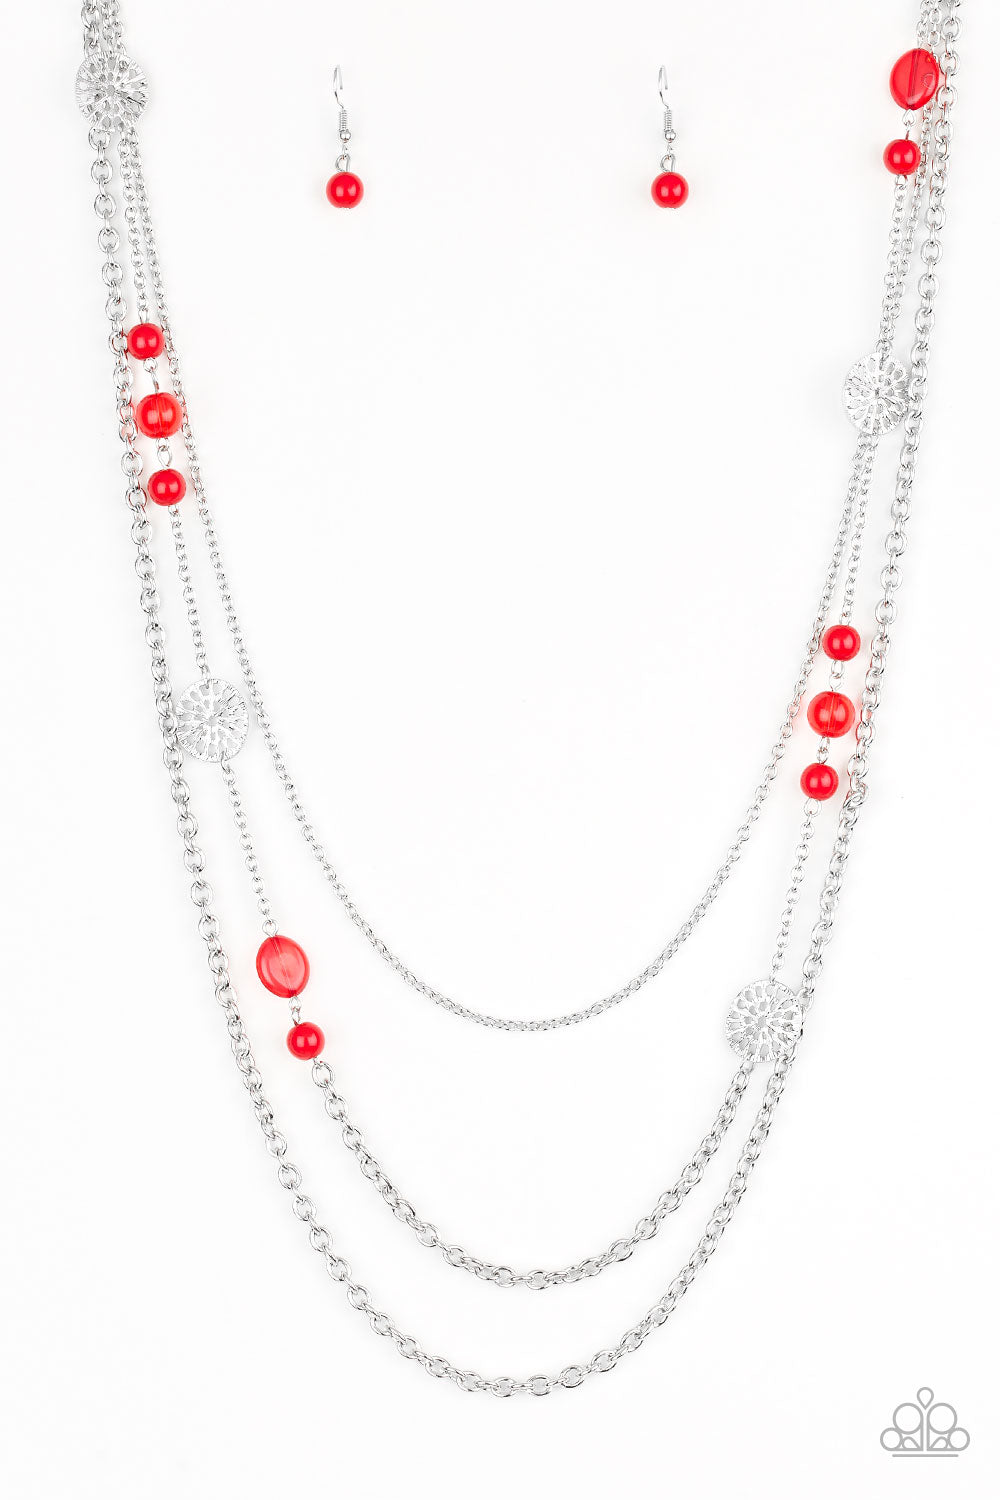 Paparazzi necklace - Pretty Pop-tastic! - Red